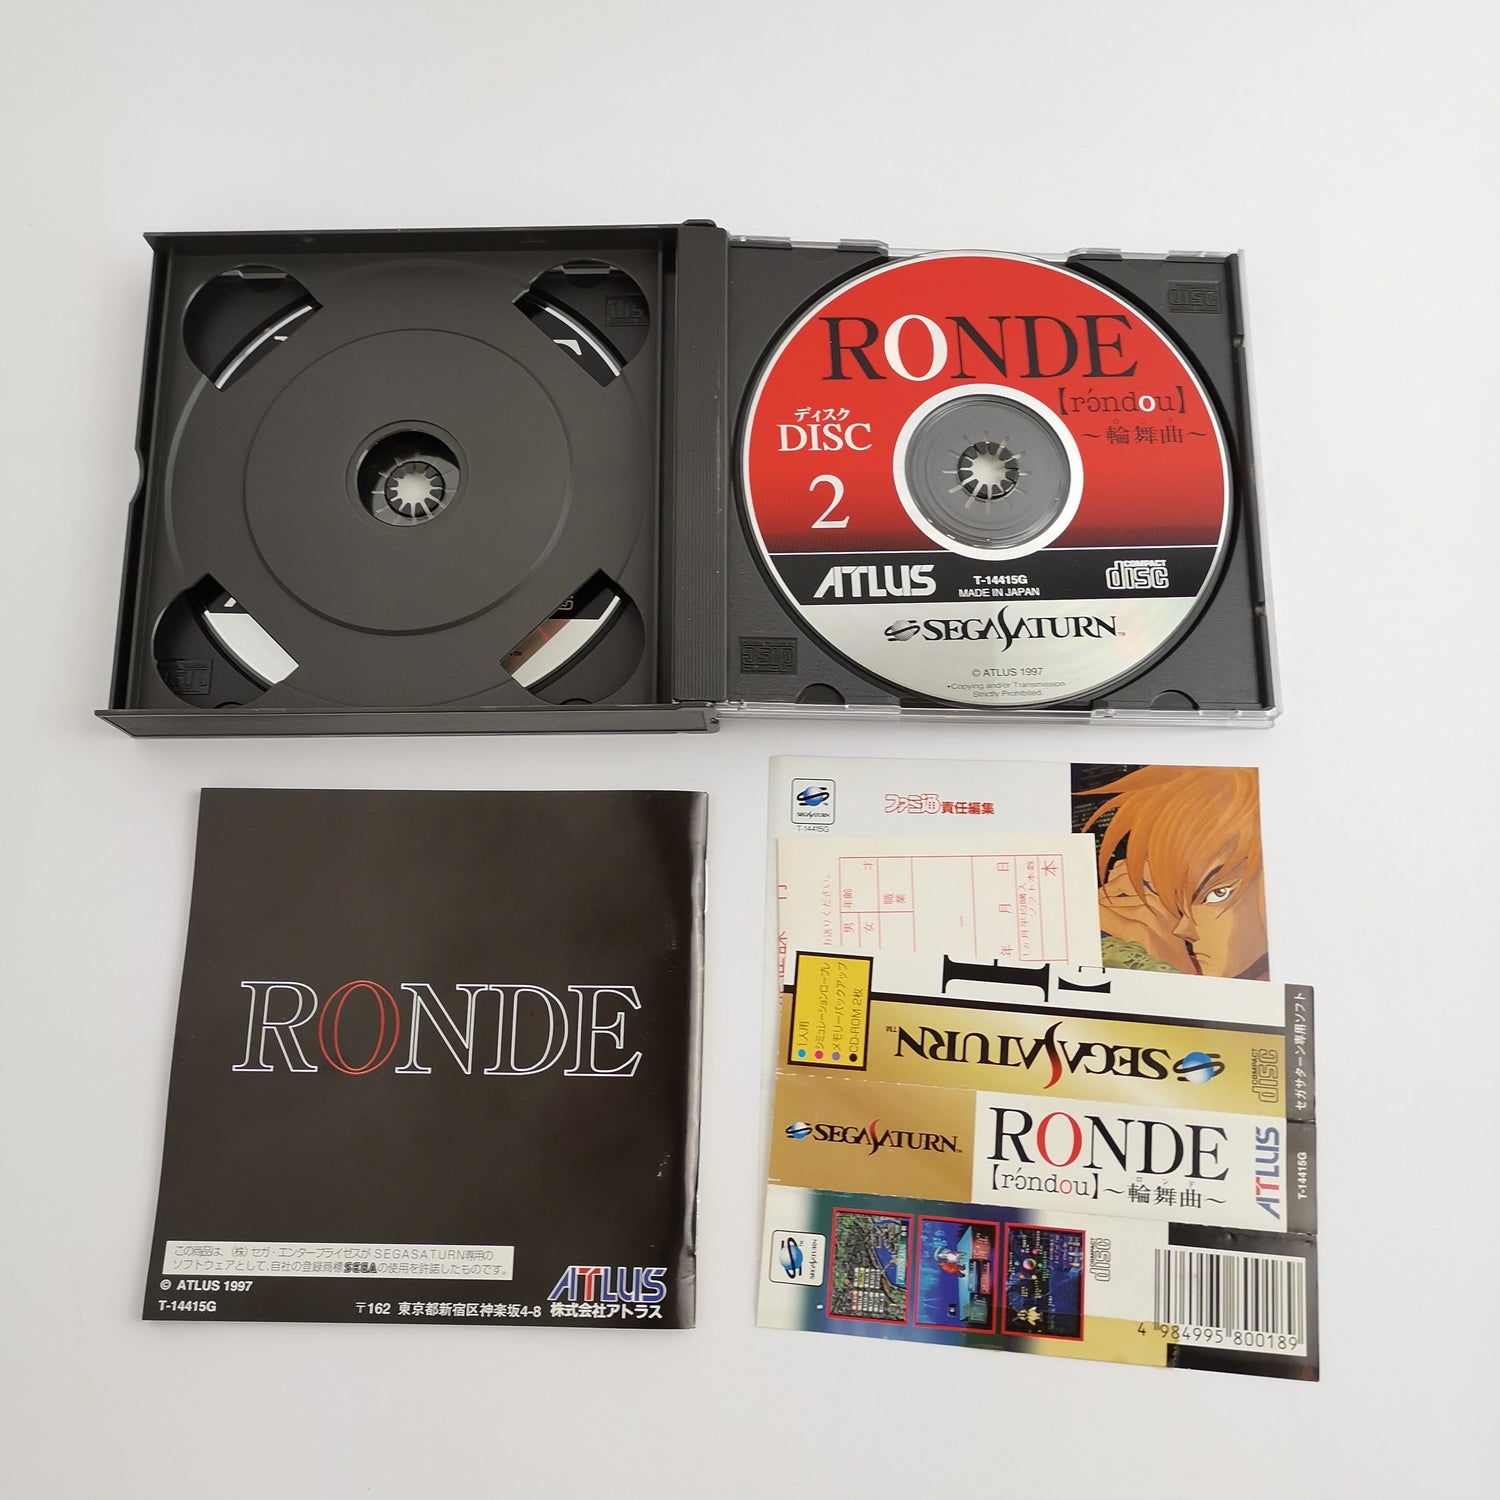 Sega Saturn Game: Ronde | NTSC-J JAPAN version - original packaging